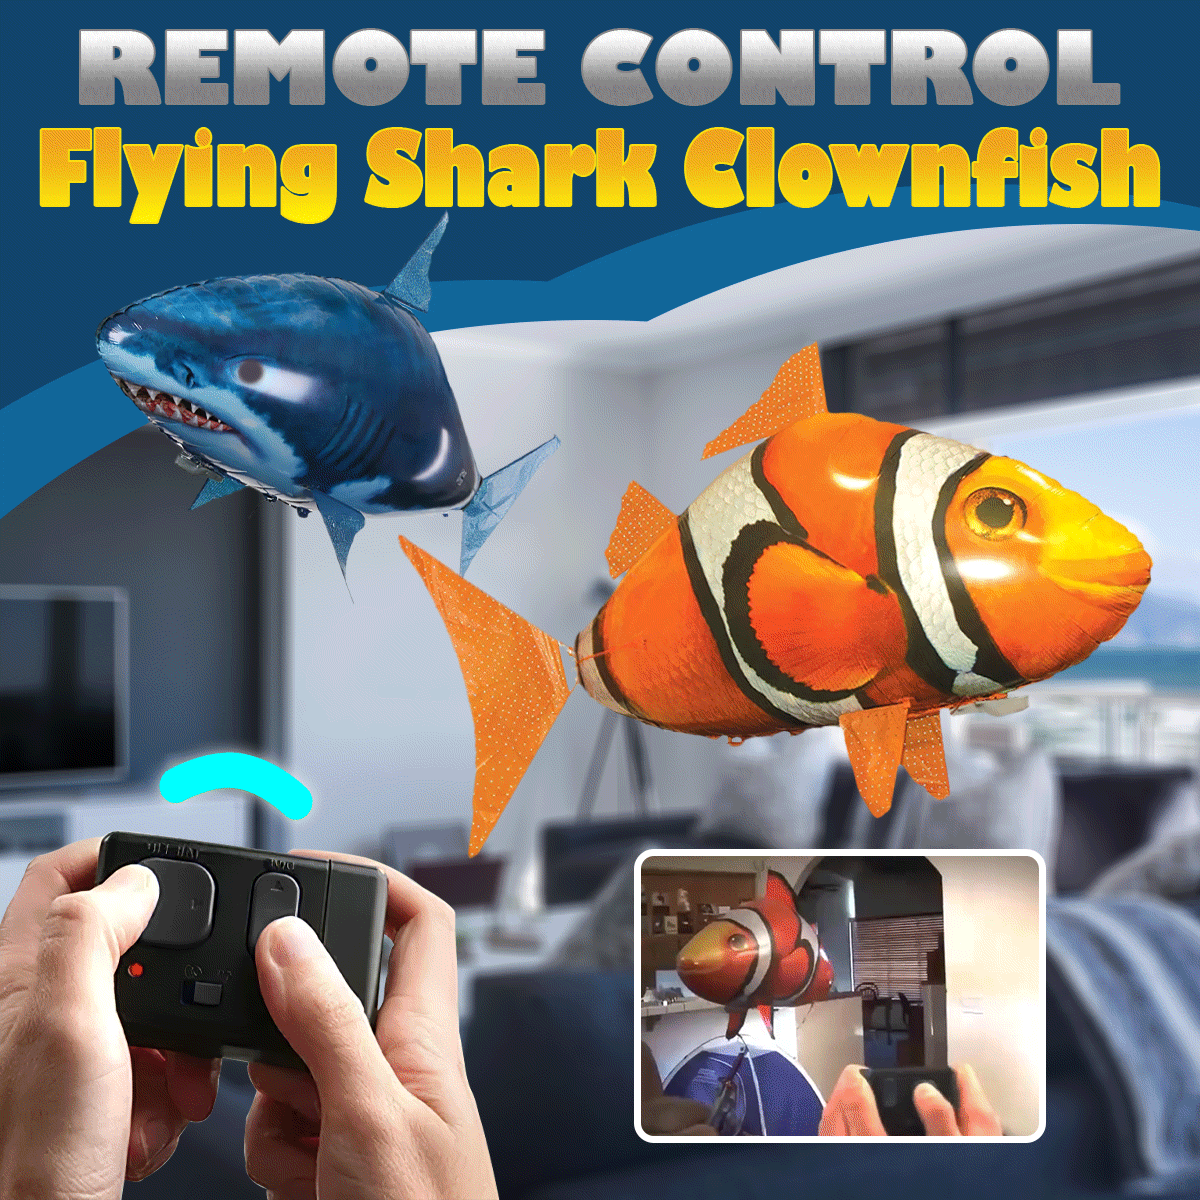 Remote Control Flying Shark Clownfish